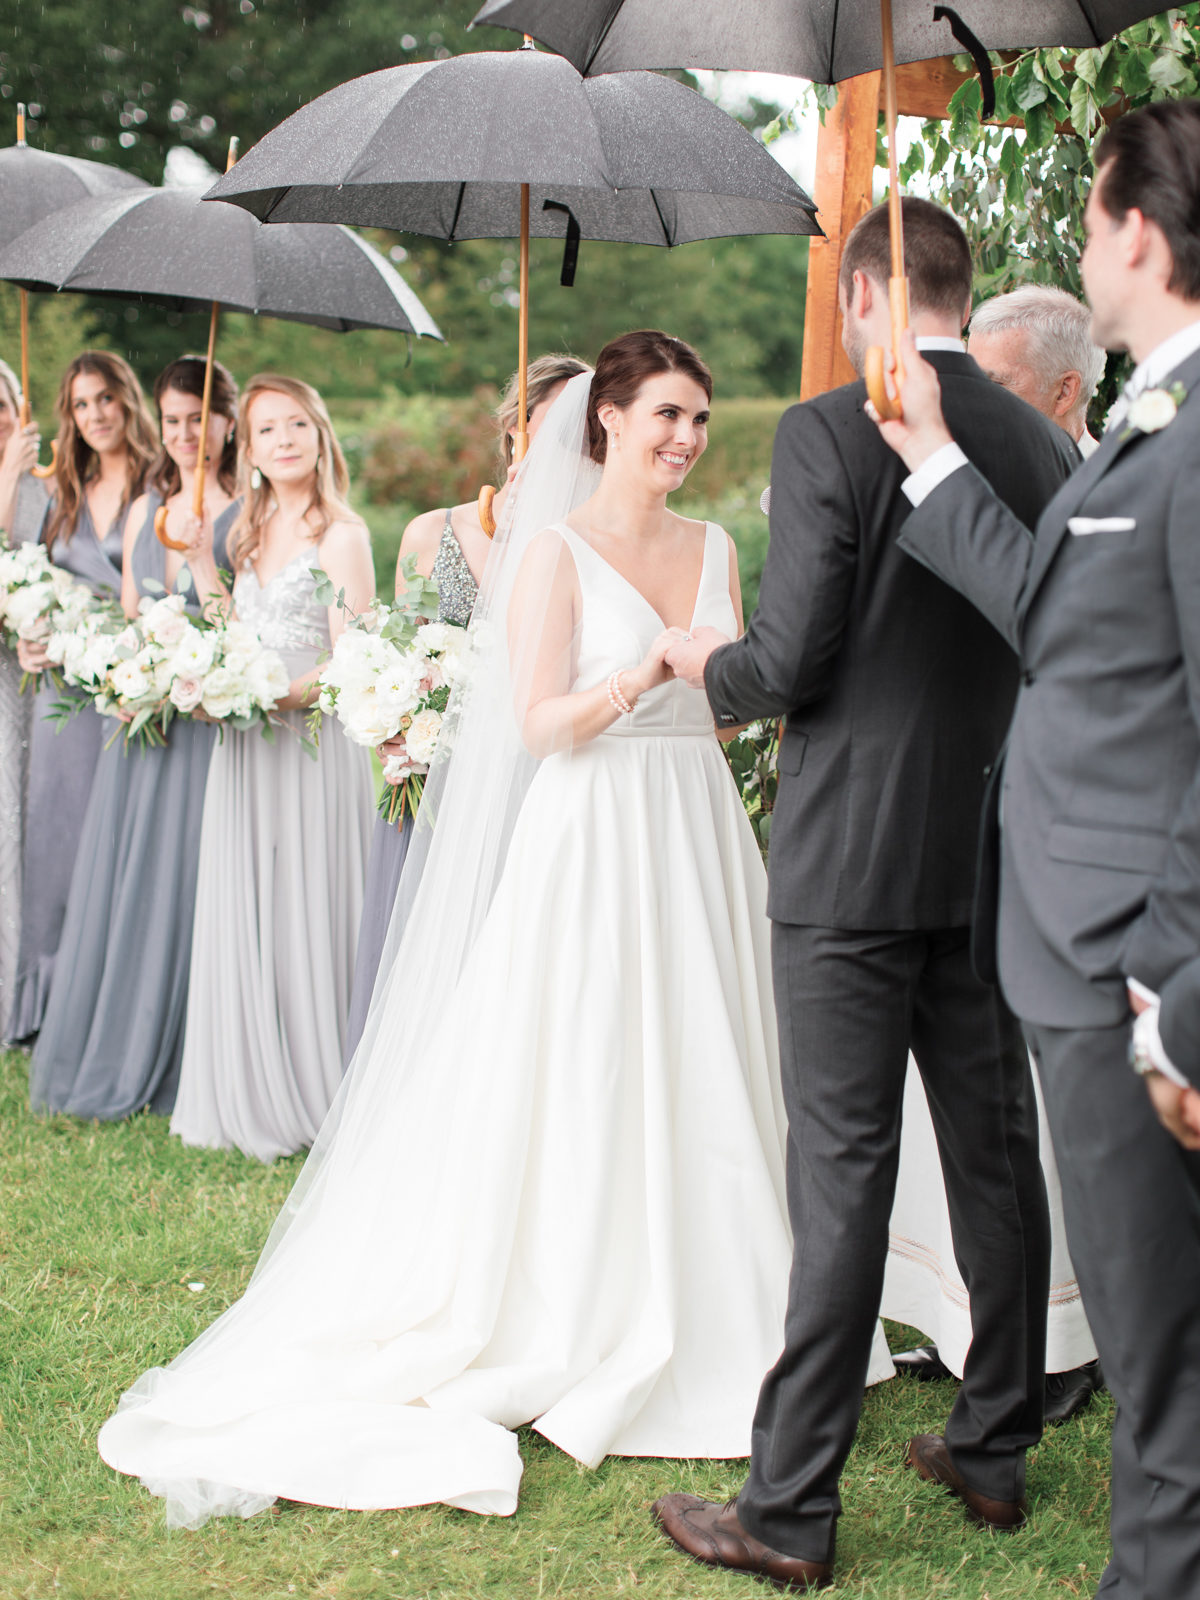 Ireland Film Photographer | Molly Carr Photography | Bride and Groom Under Black Umbrellas During Mount Juliet Estate Wedding Ceremony